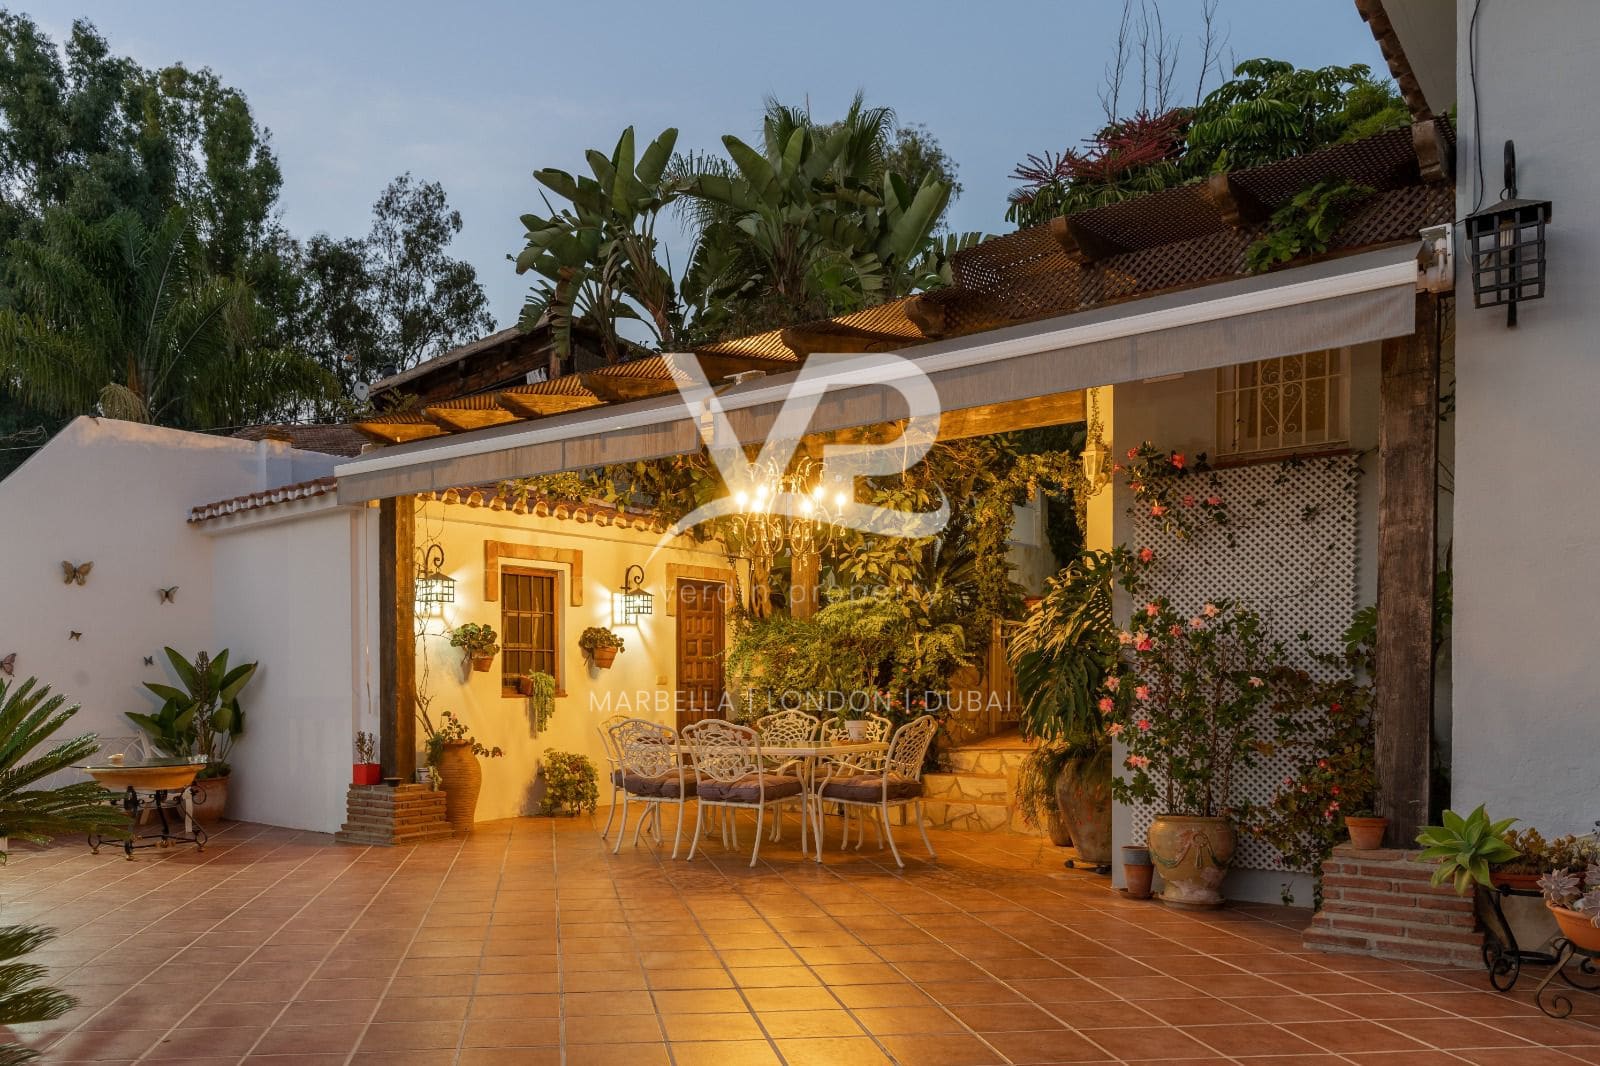 Villa La Orilla, rental villa in Benajarafe - Verdin Property